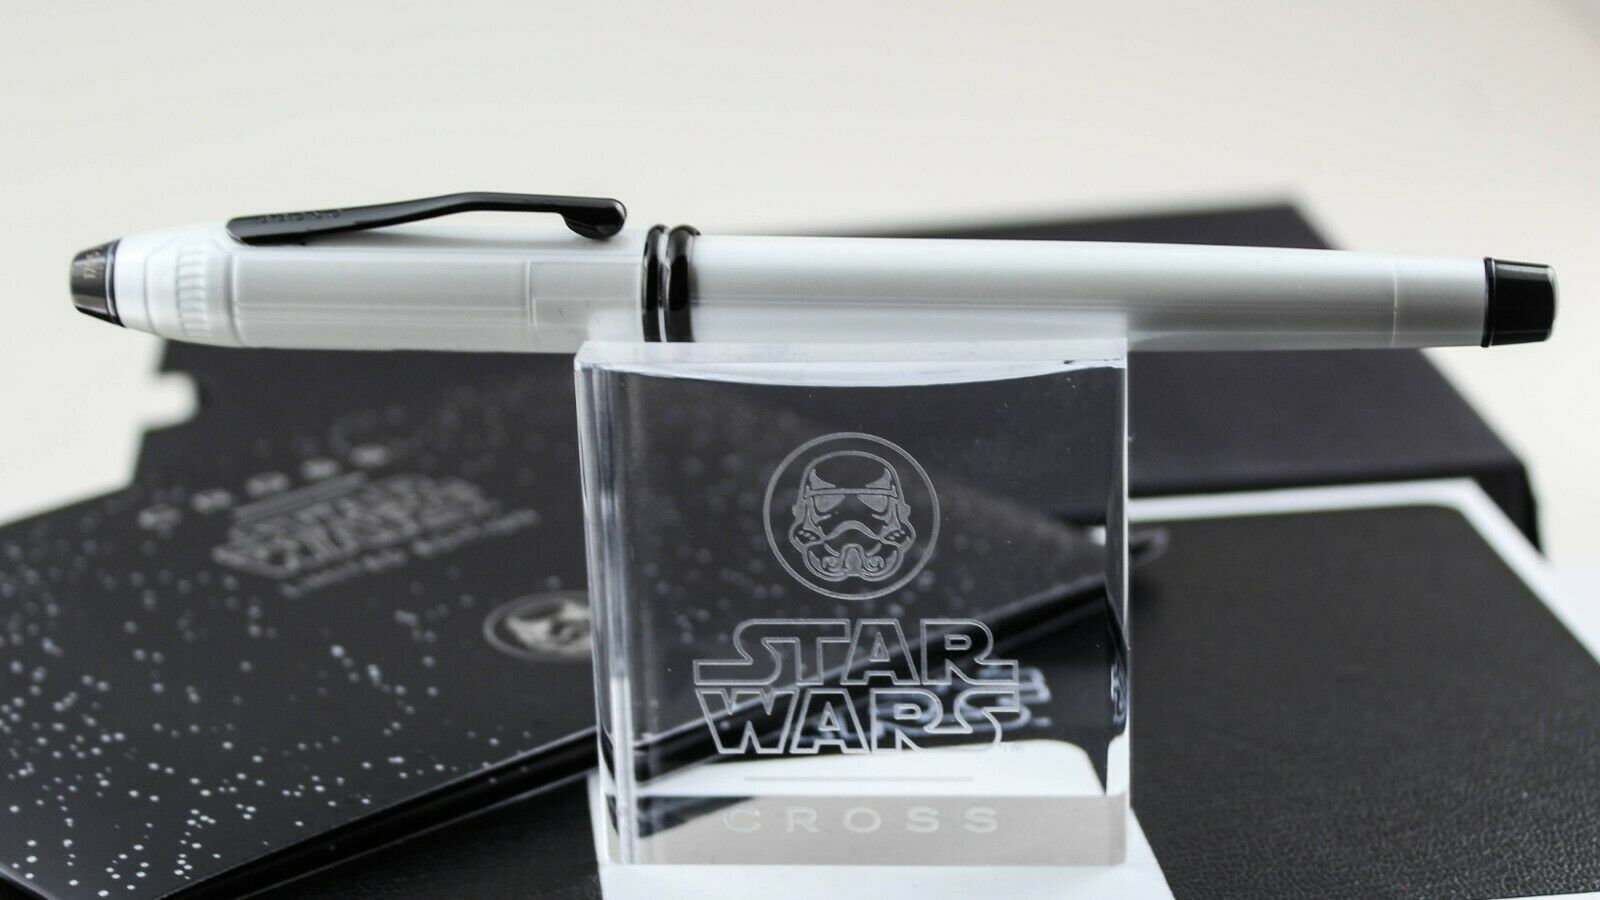 Cross Star Wars Pen Collection Honors The Long-Running Saga